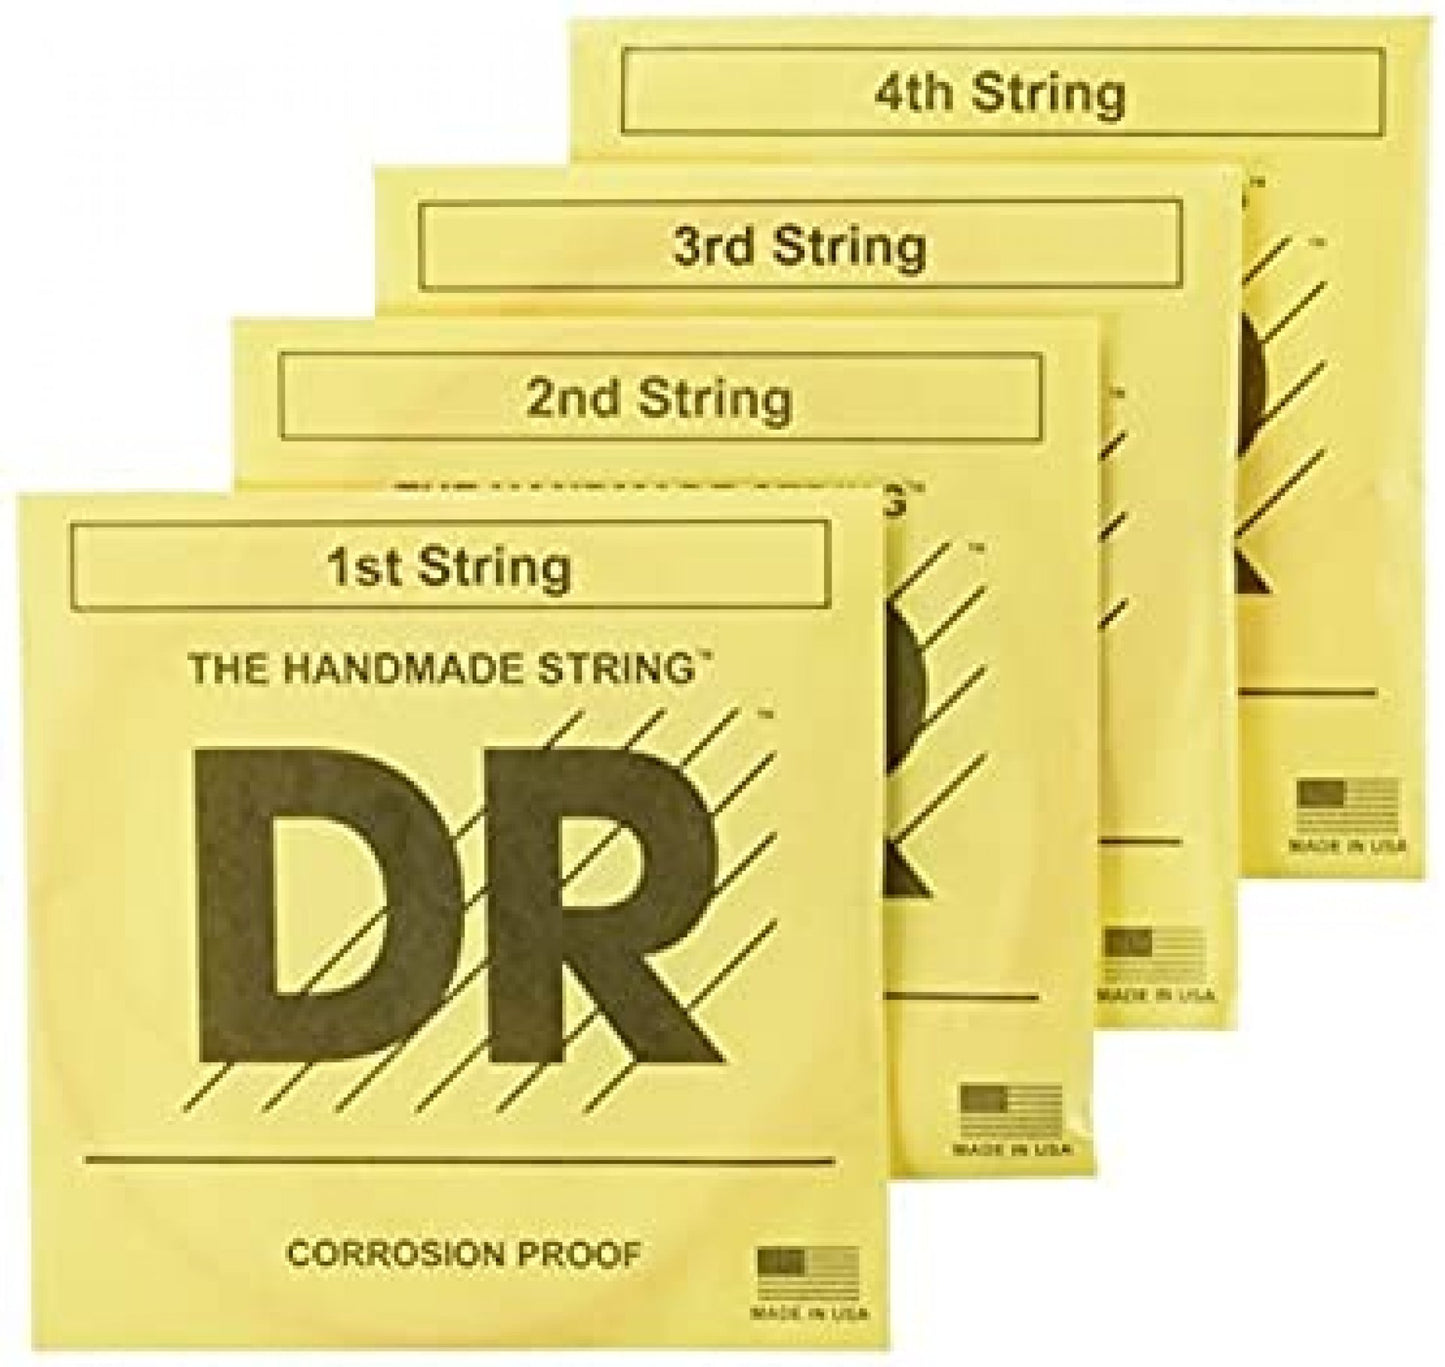 DR Hi-Def Neon Red Medium 4 String bass 45-105 (NRB-45)